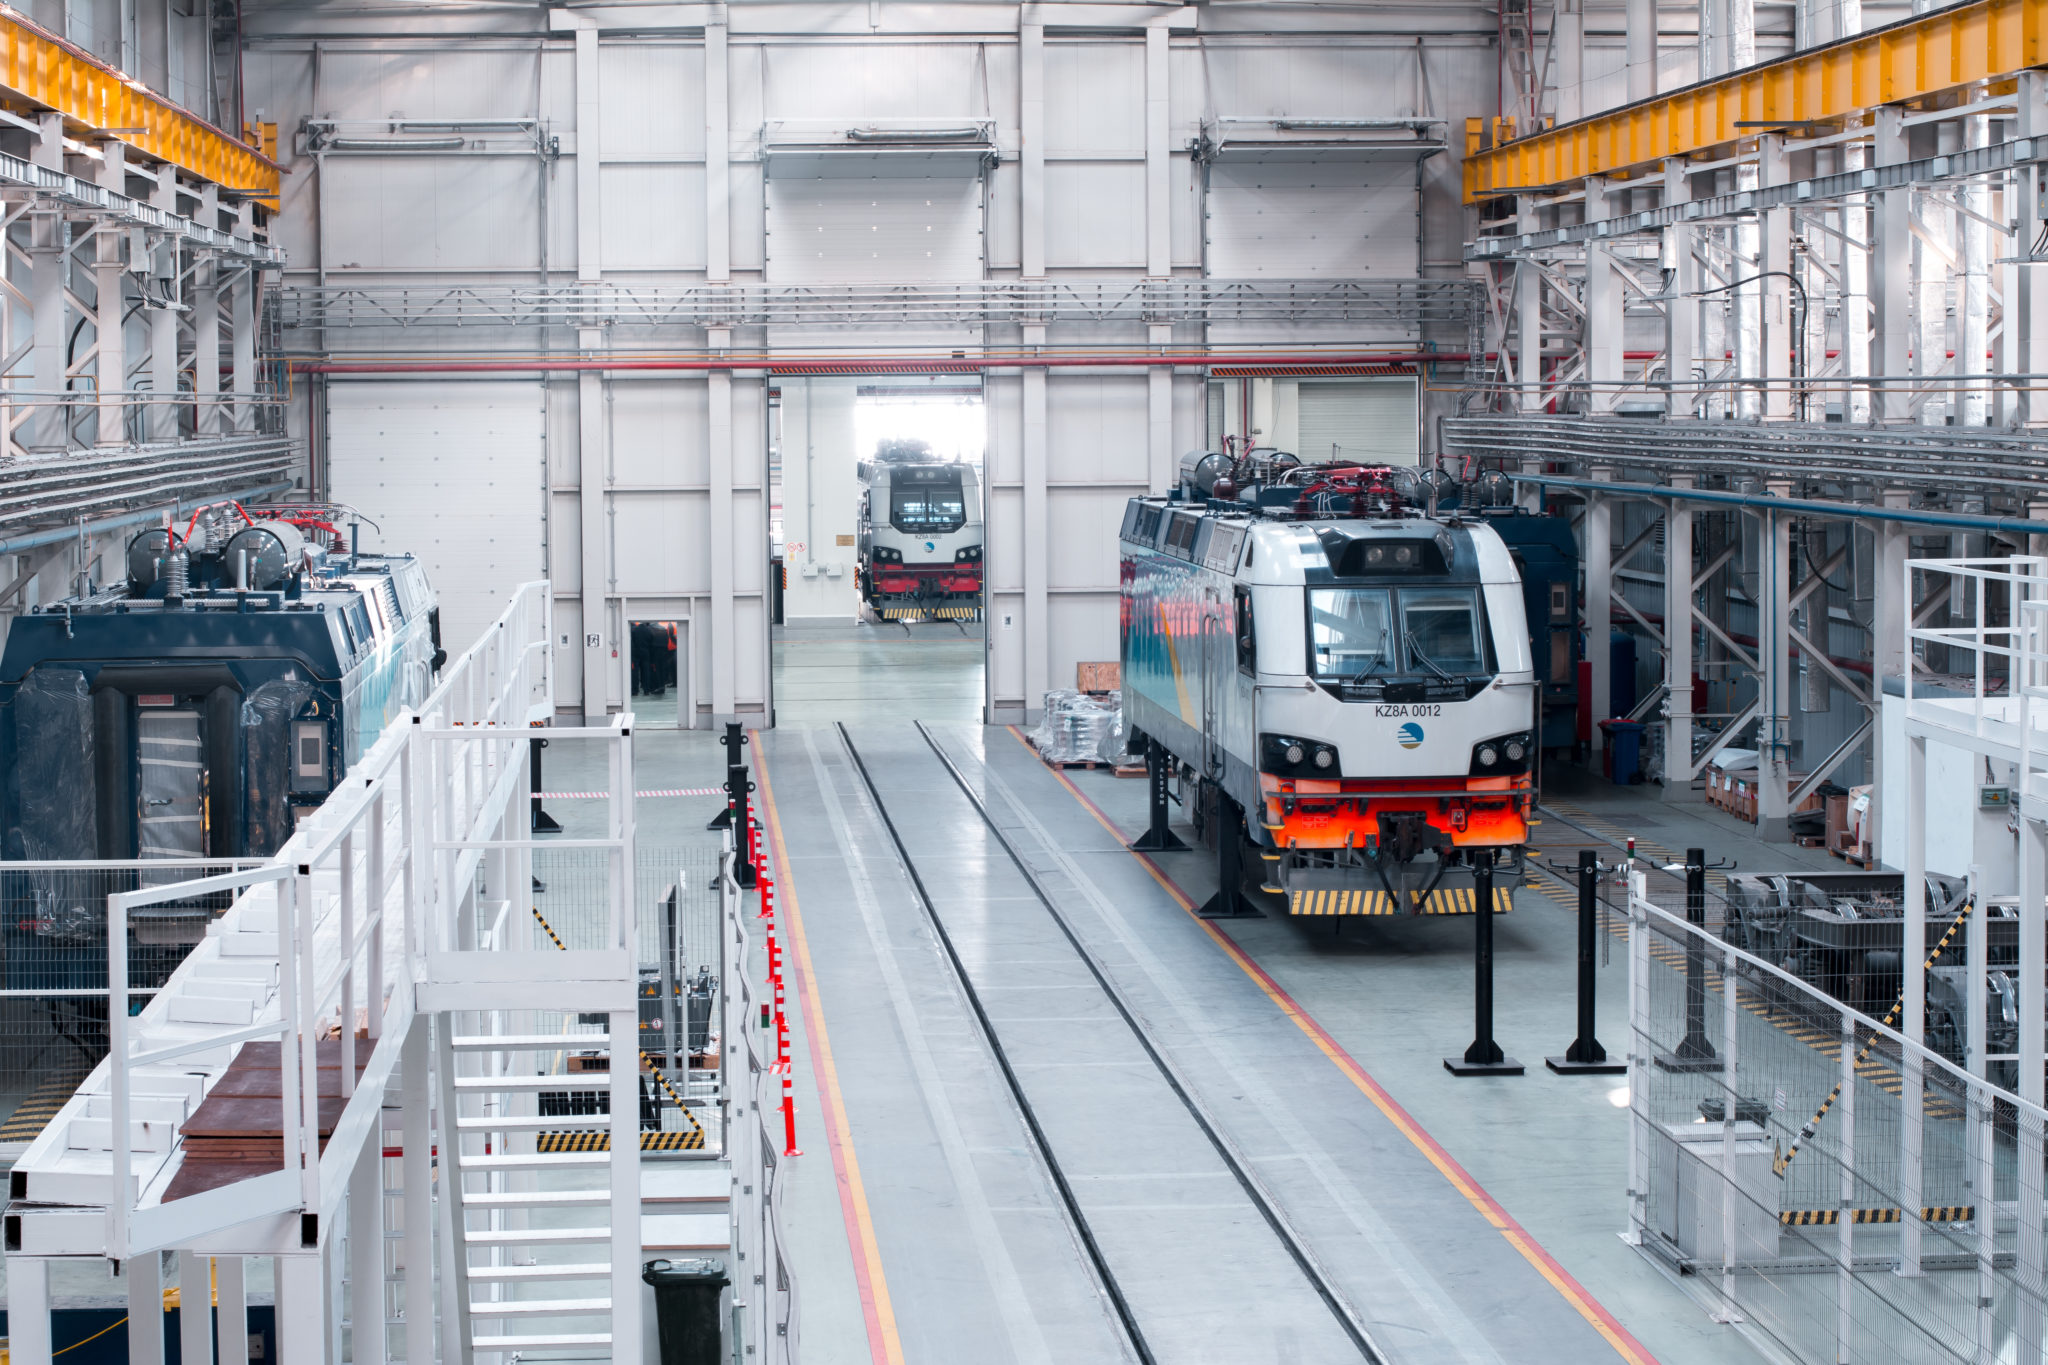 Alstom electric locomotive assembling site in Kazakhstan